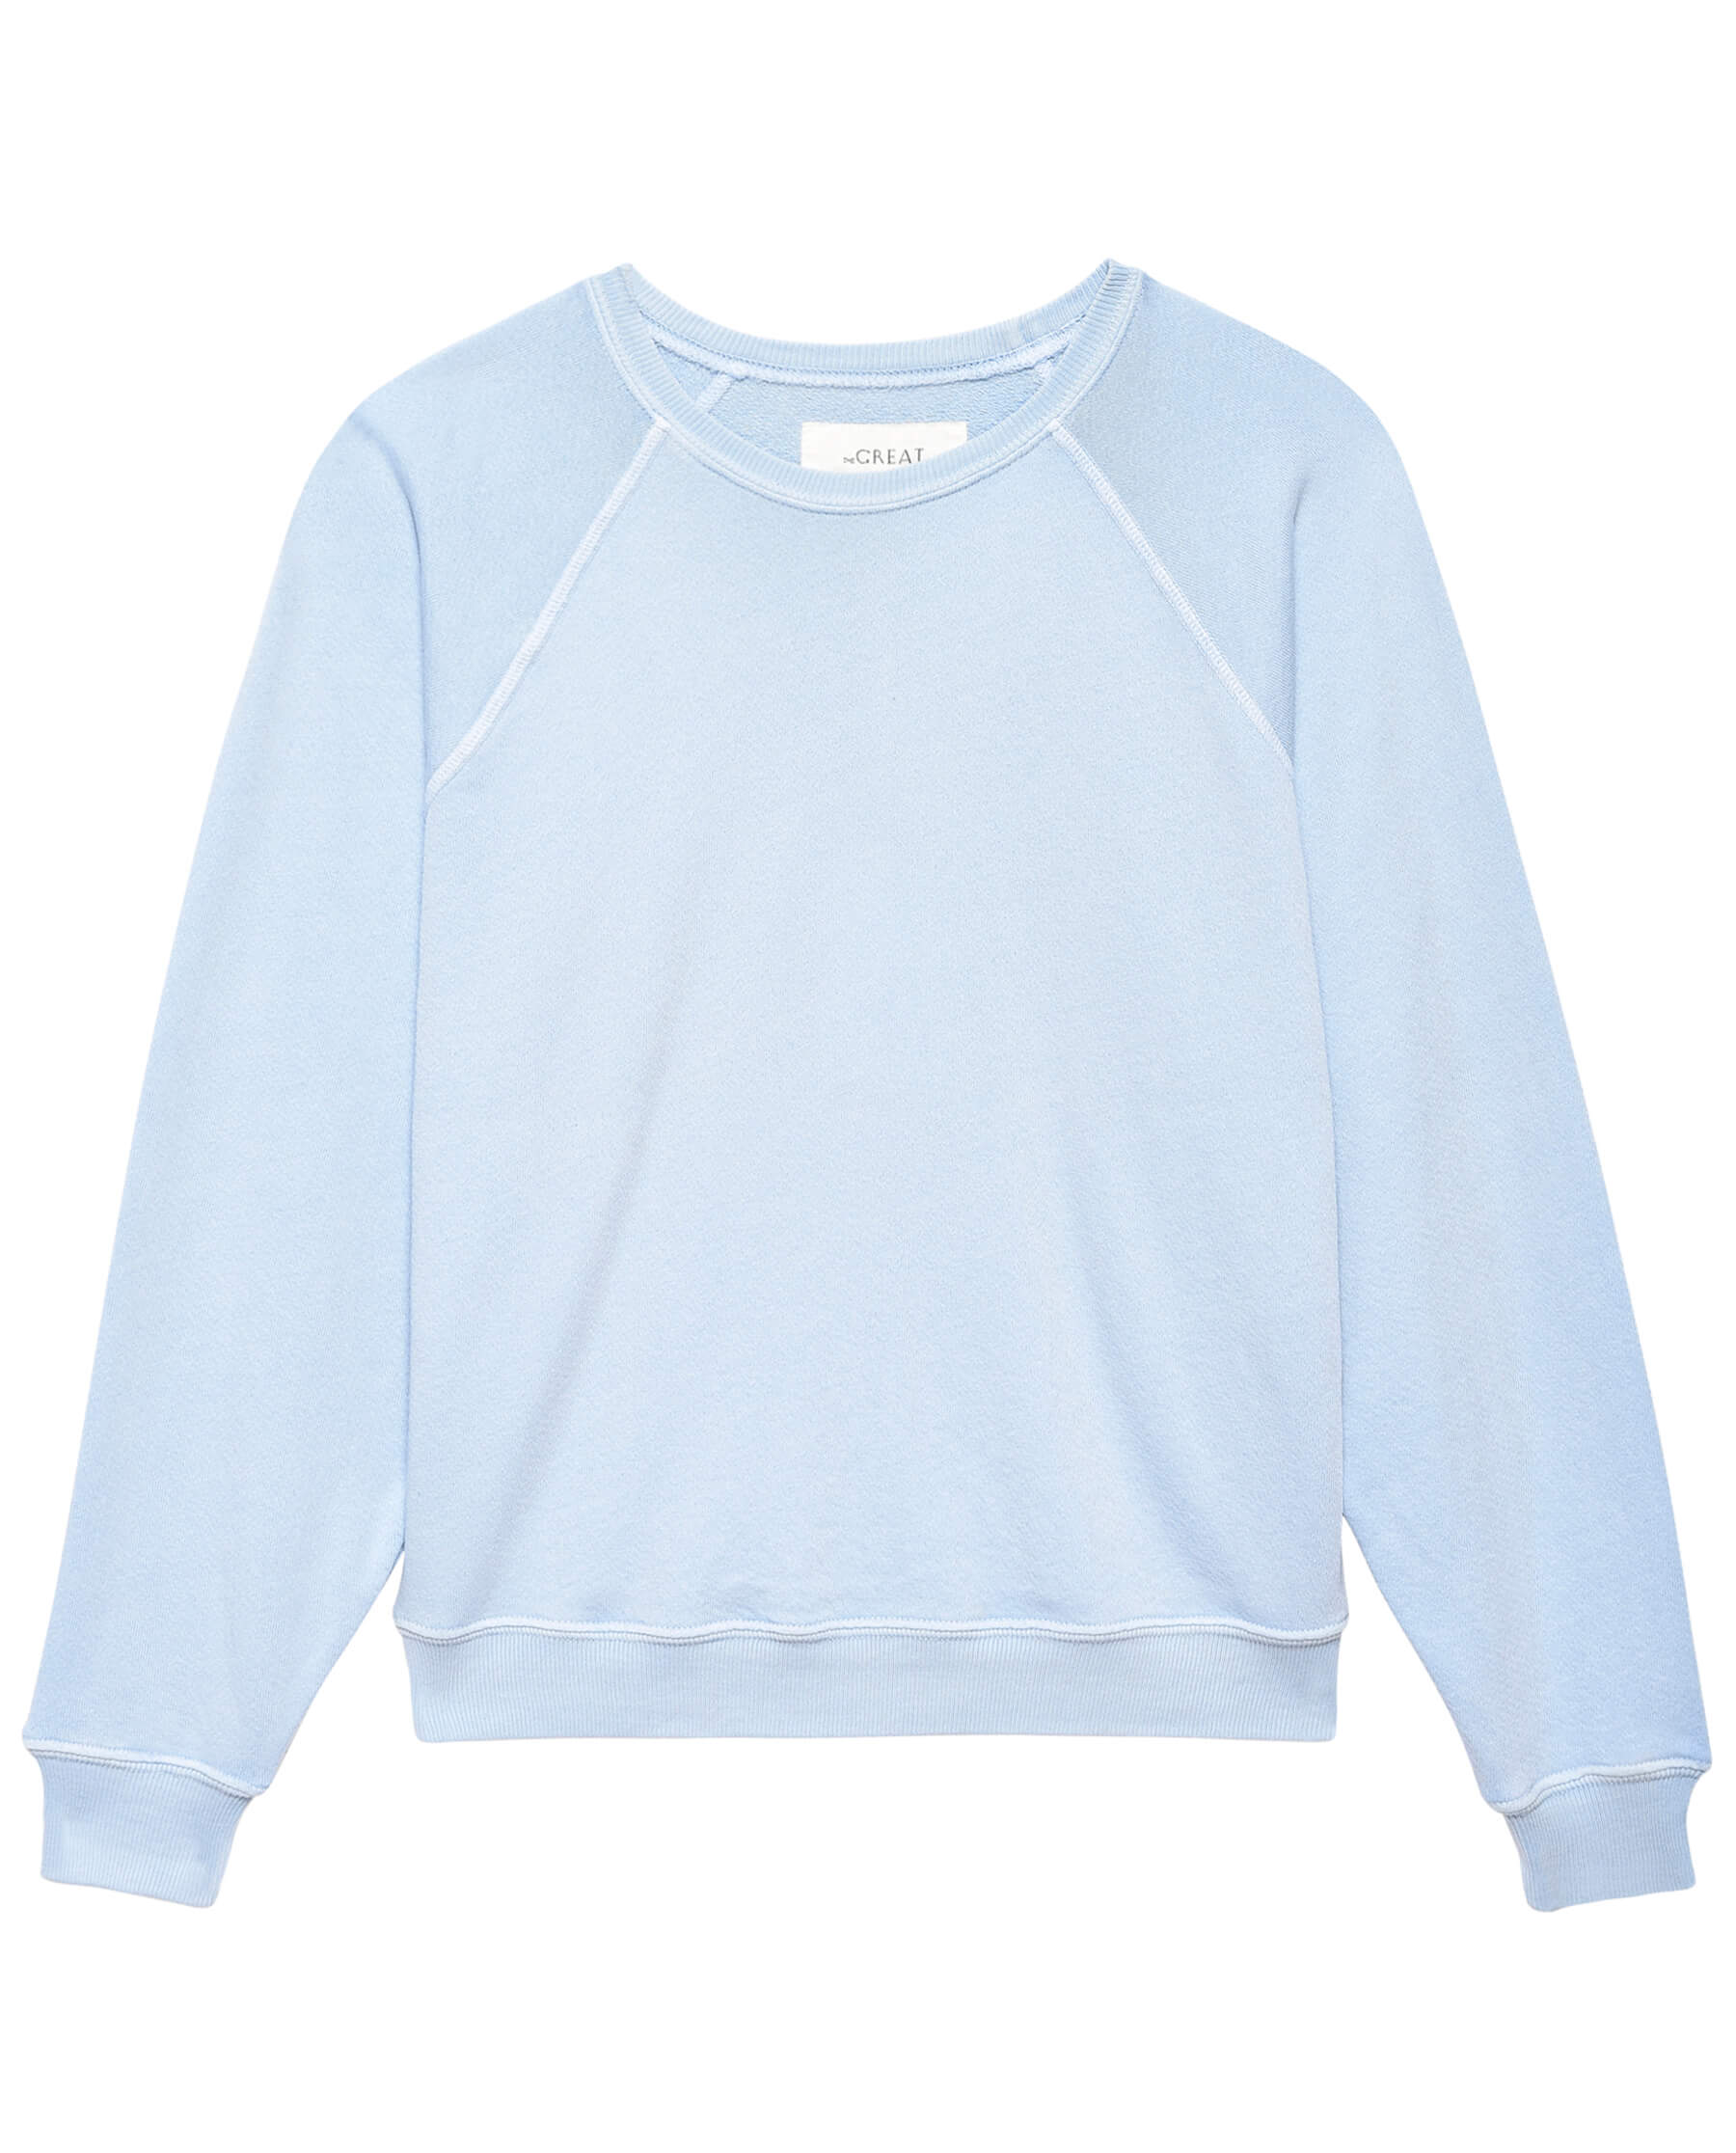 The Shrunken Sweatshirt. Solid -- Bluebell